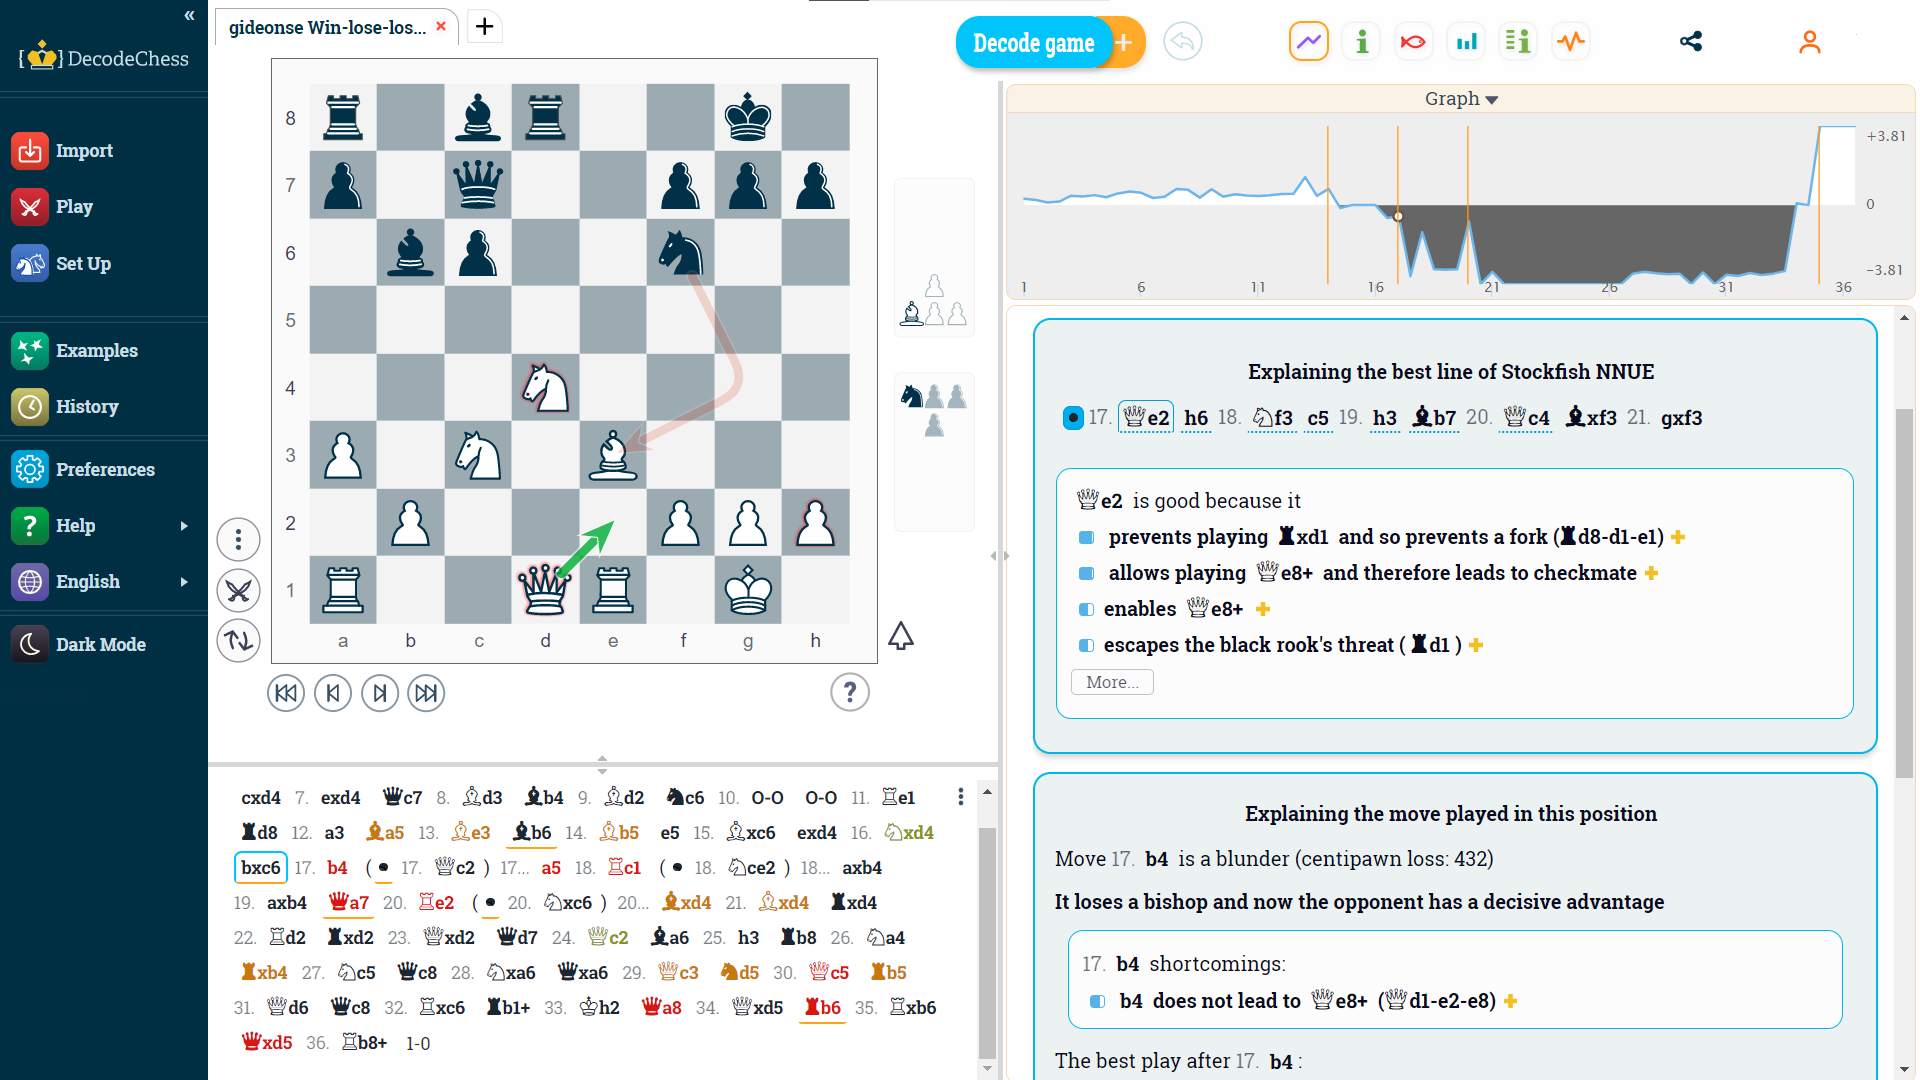 Solentware - Chess database software